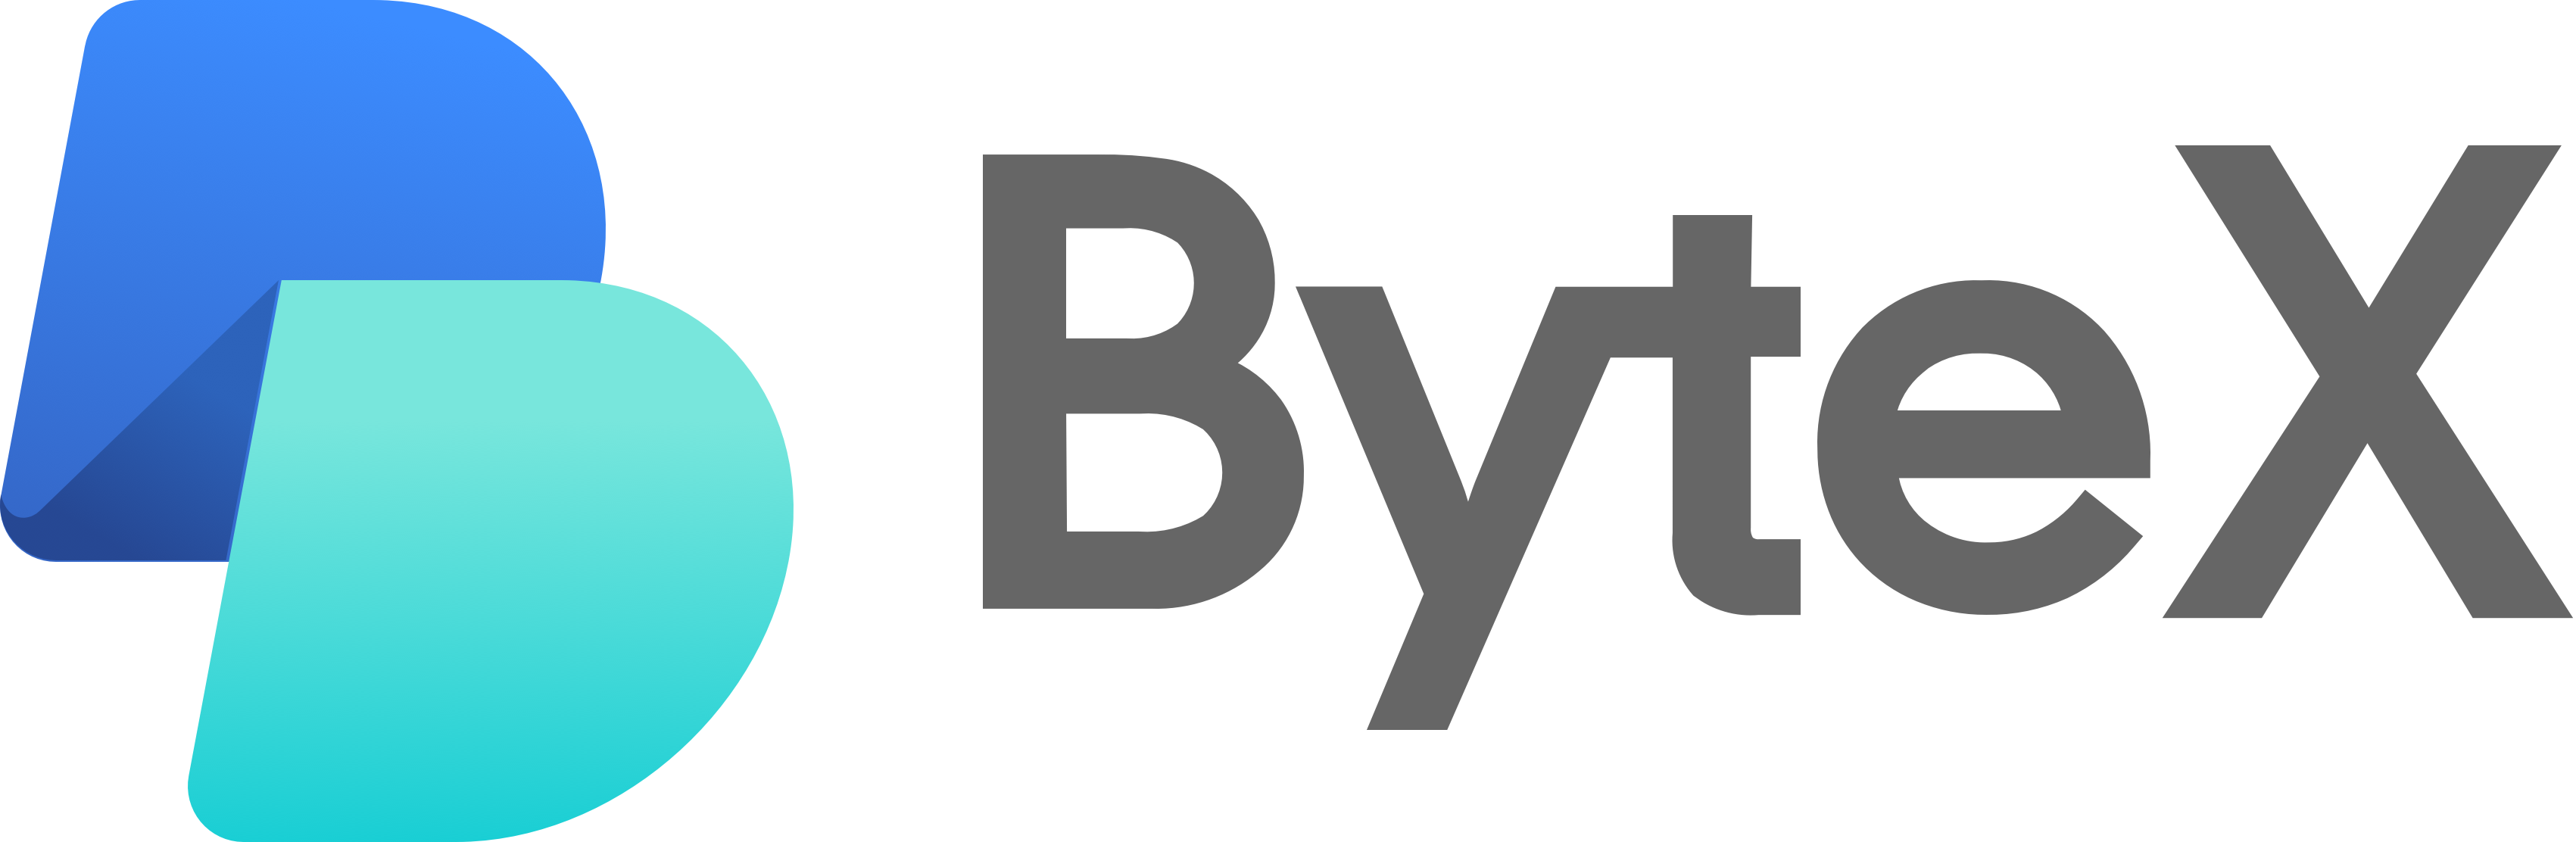 bytex-logo.png